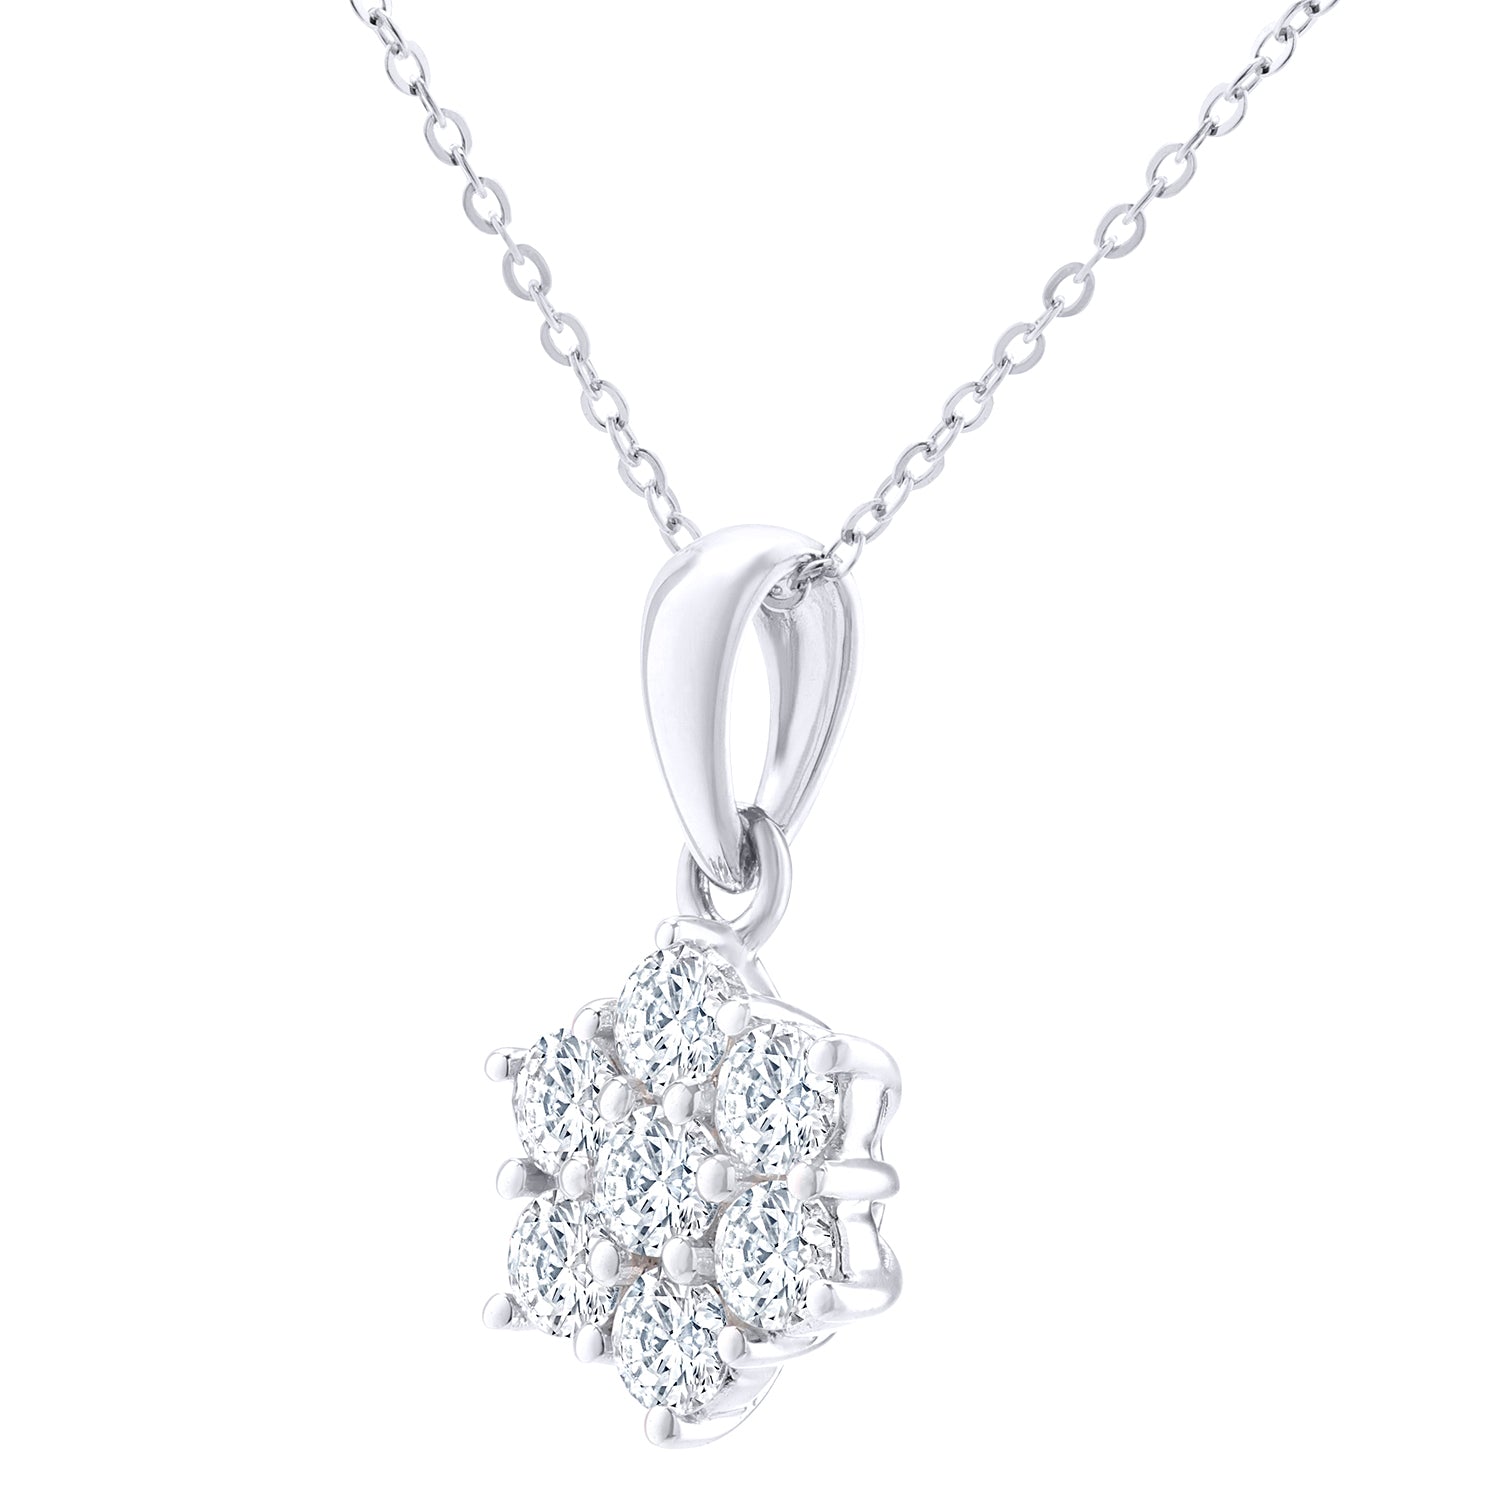 Platinum  Round 1ct Diamond Solitaire Pendant Necklace 18 inch - PP0AXL1892PTJPK